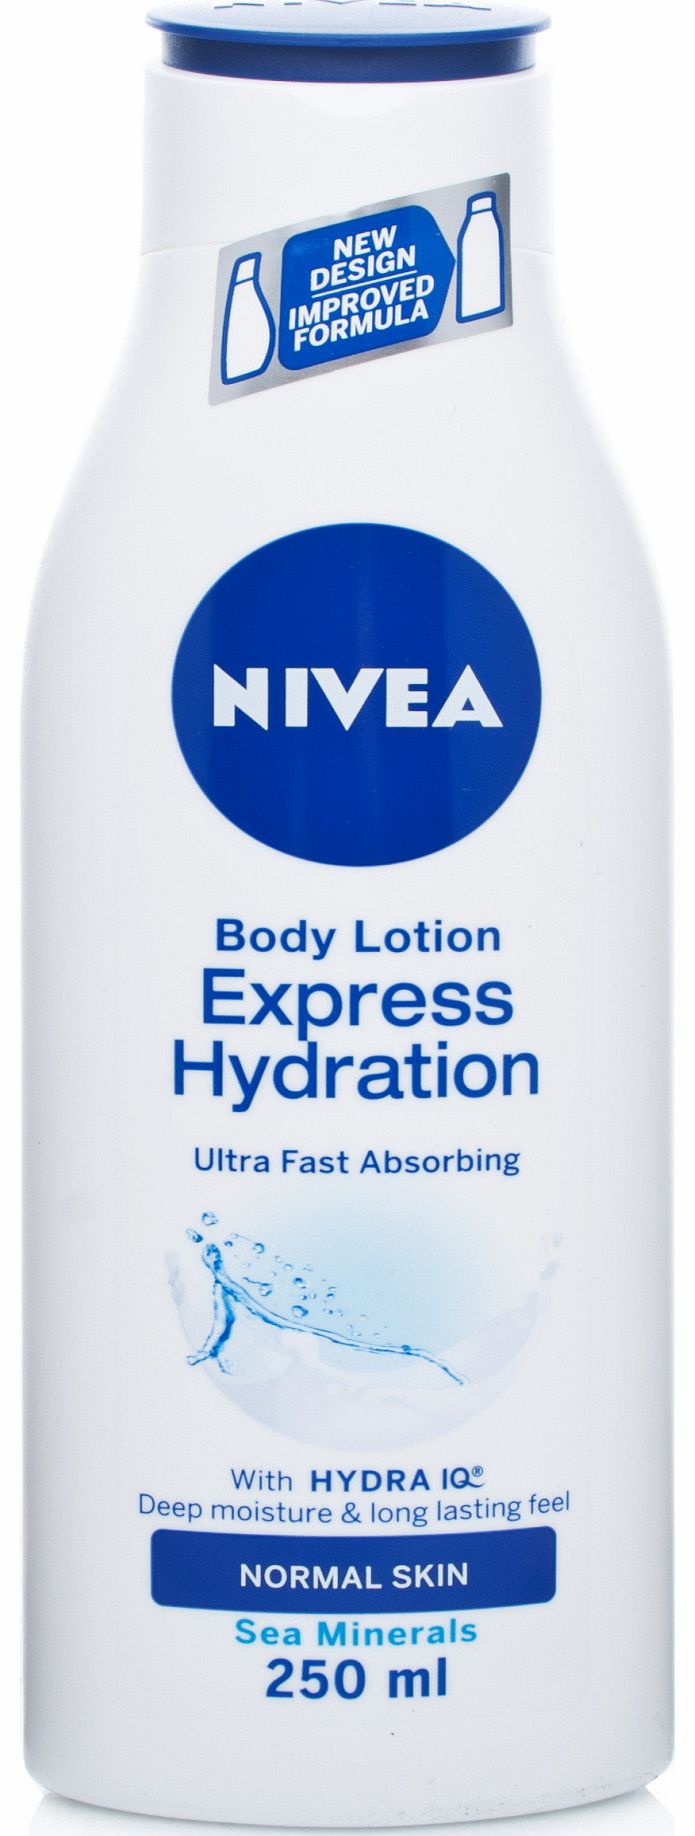 Express Hydration Body Lotion